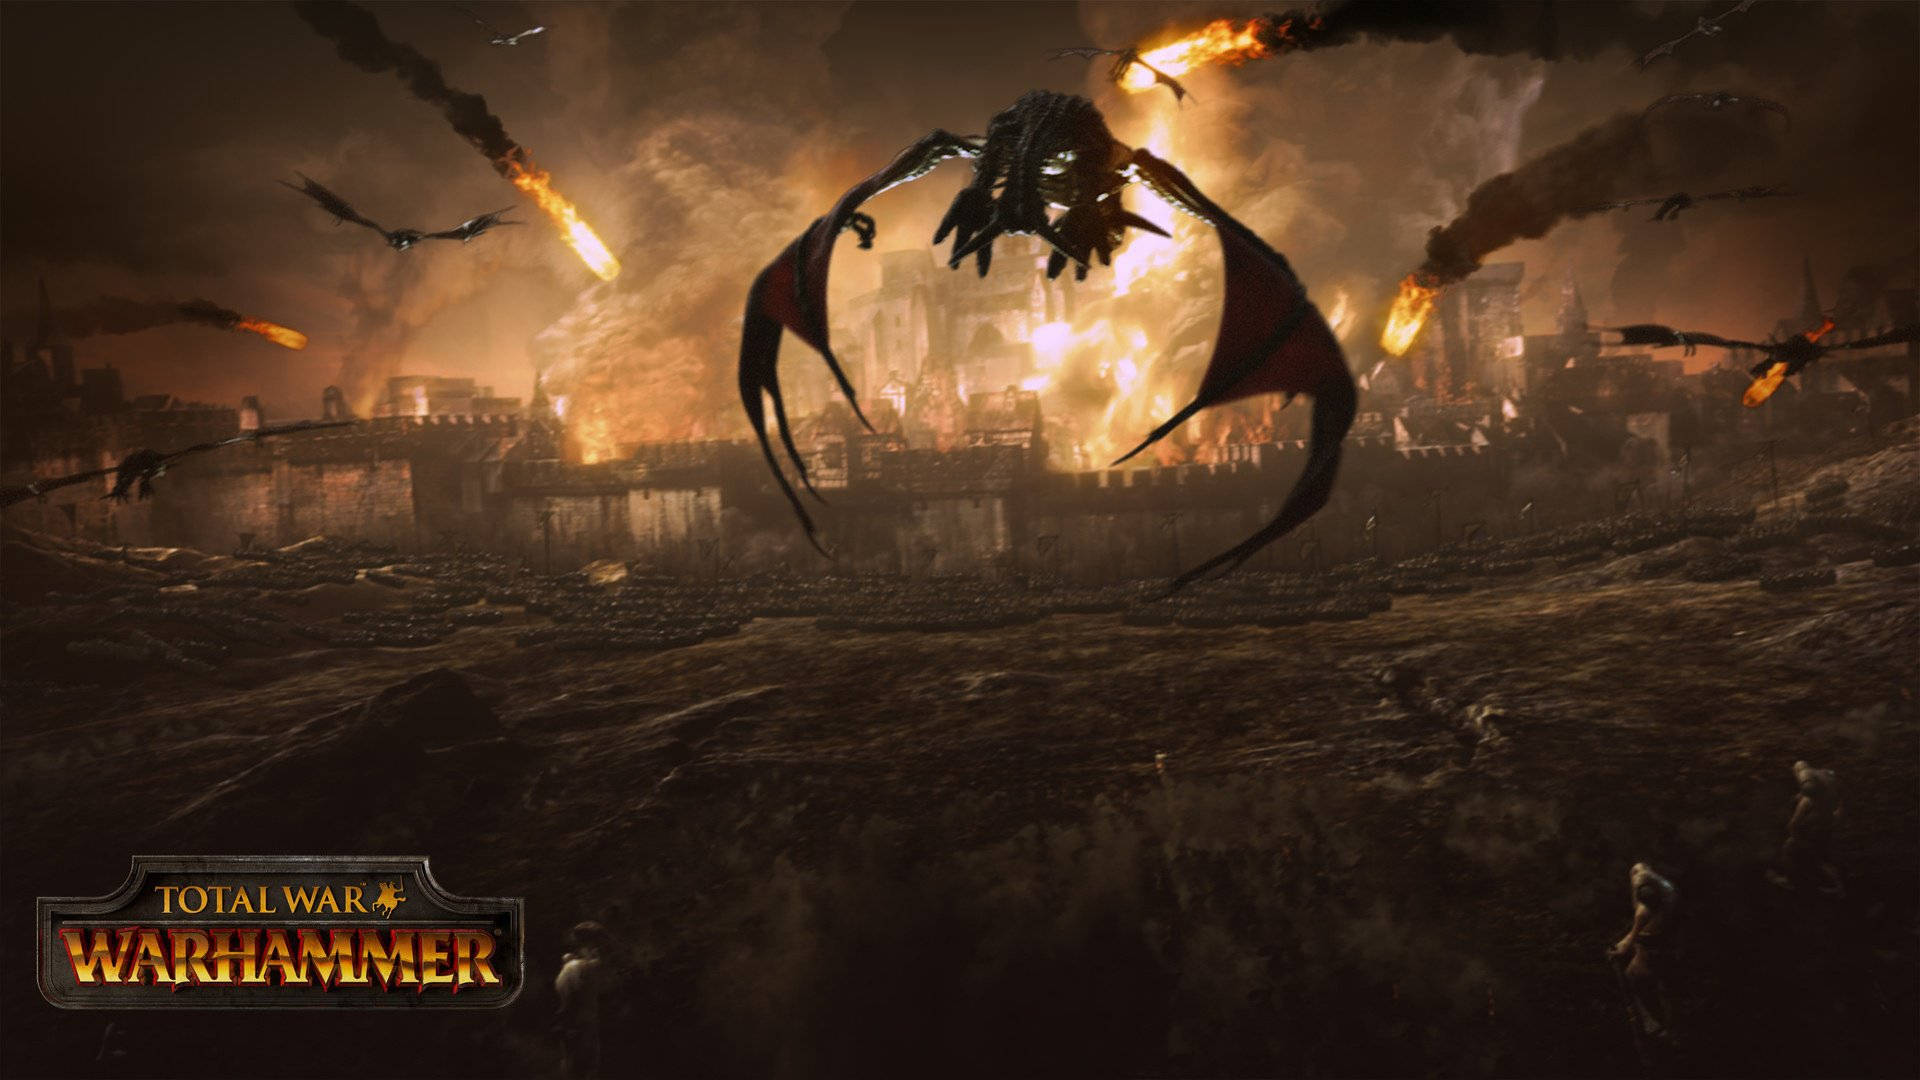 Total War Warhammer 2 Burning City Background